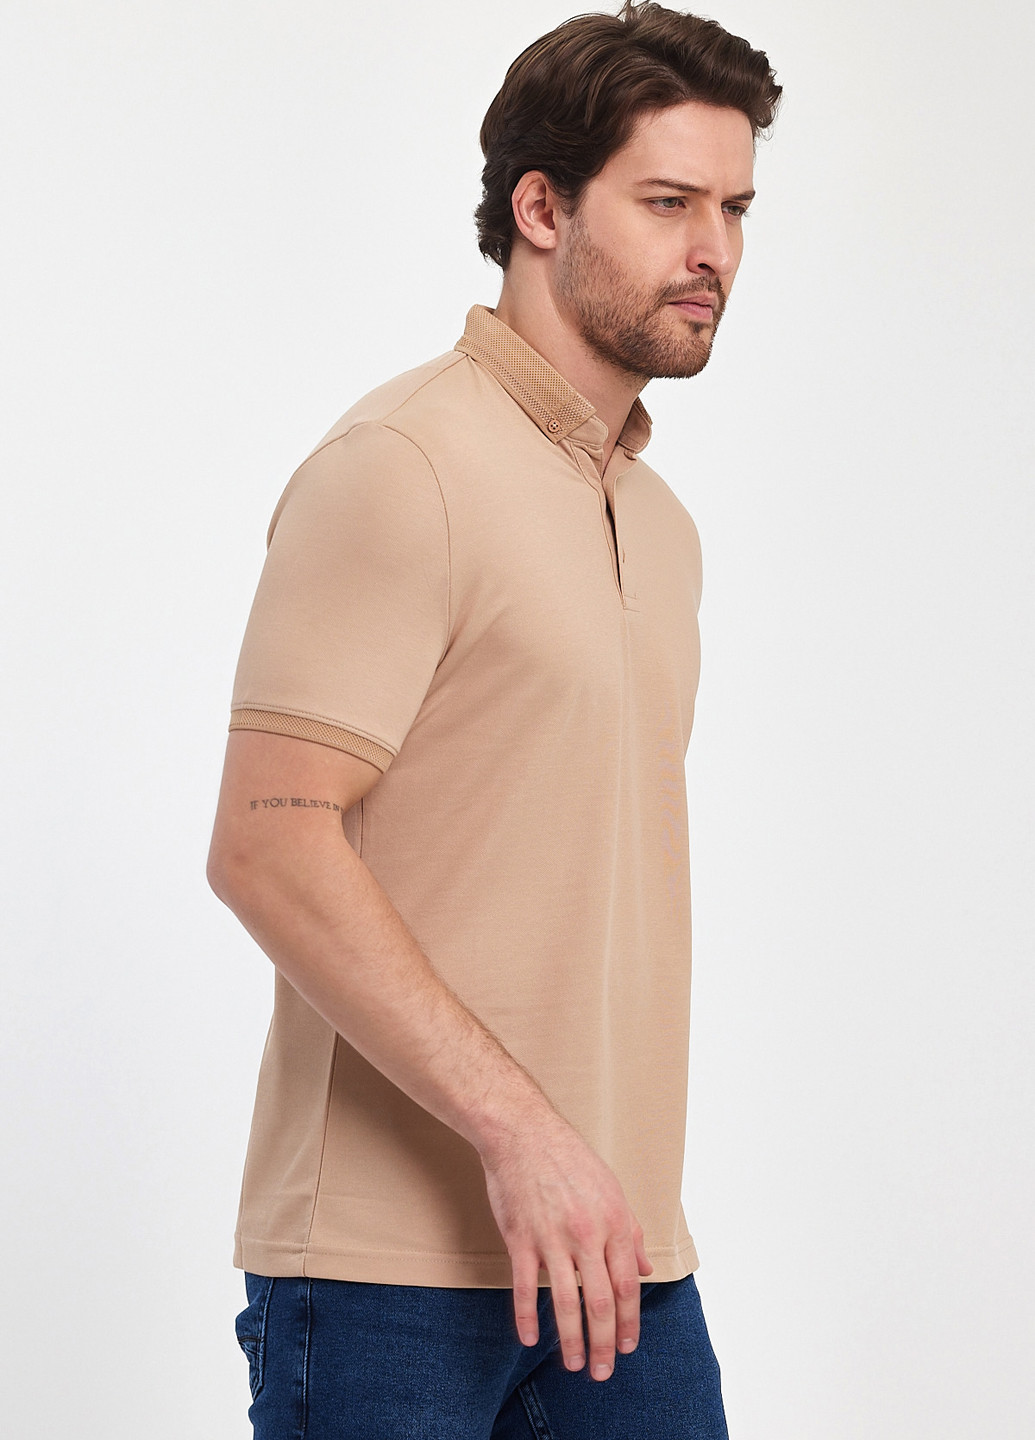 Бежевая футболка-поло для мужчин Trend Collection однотонная